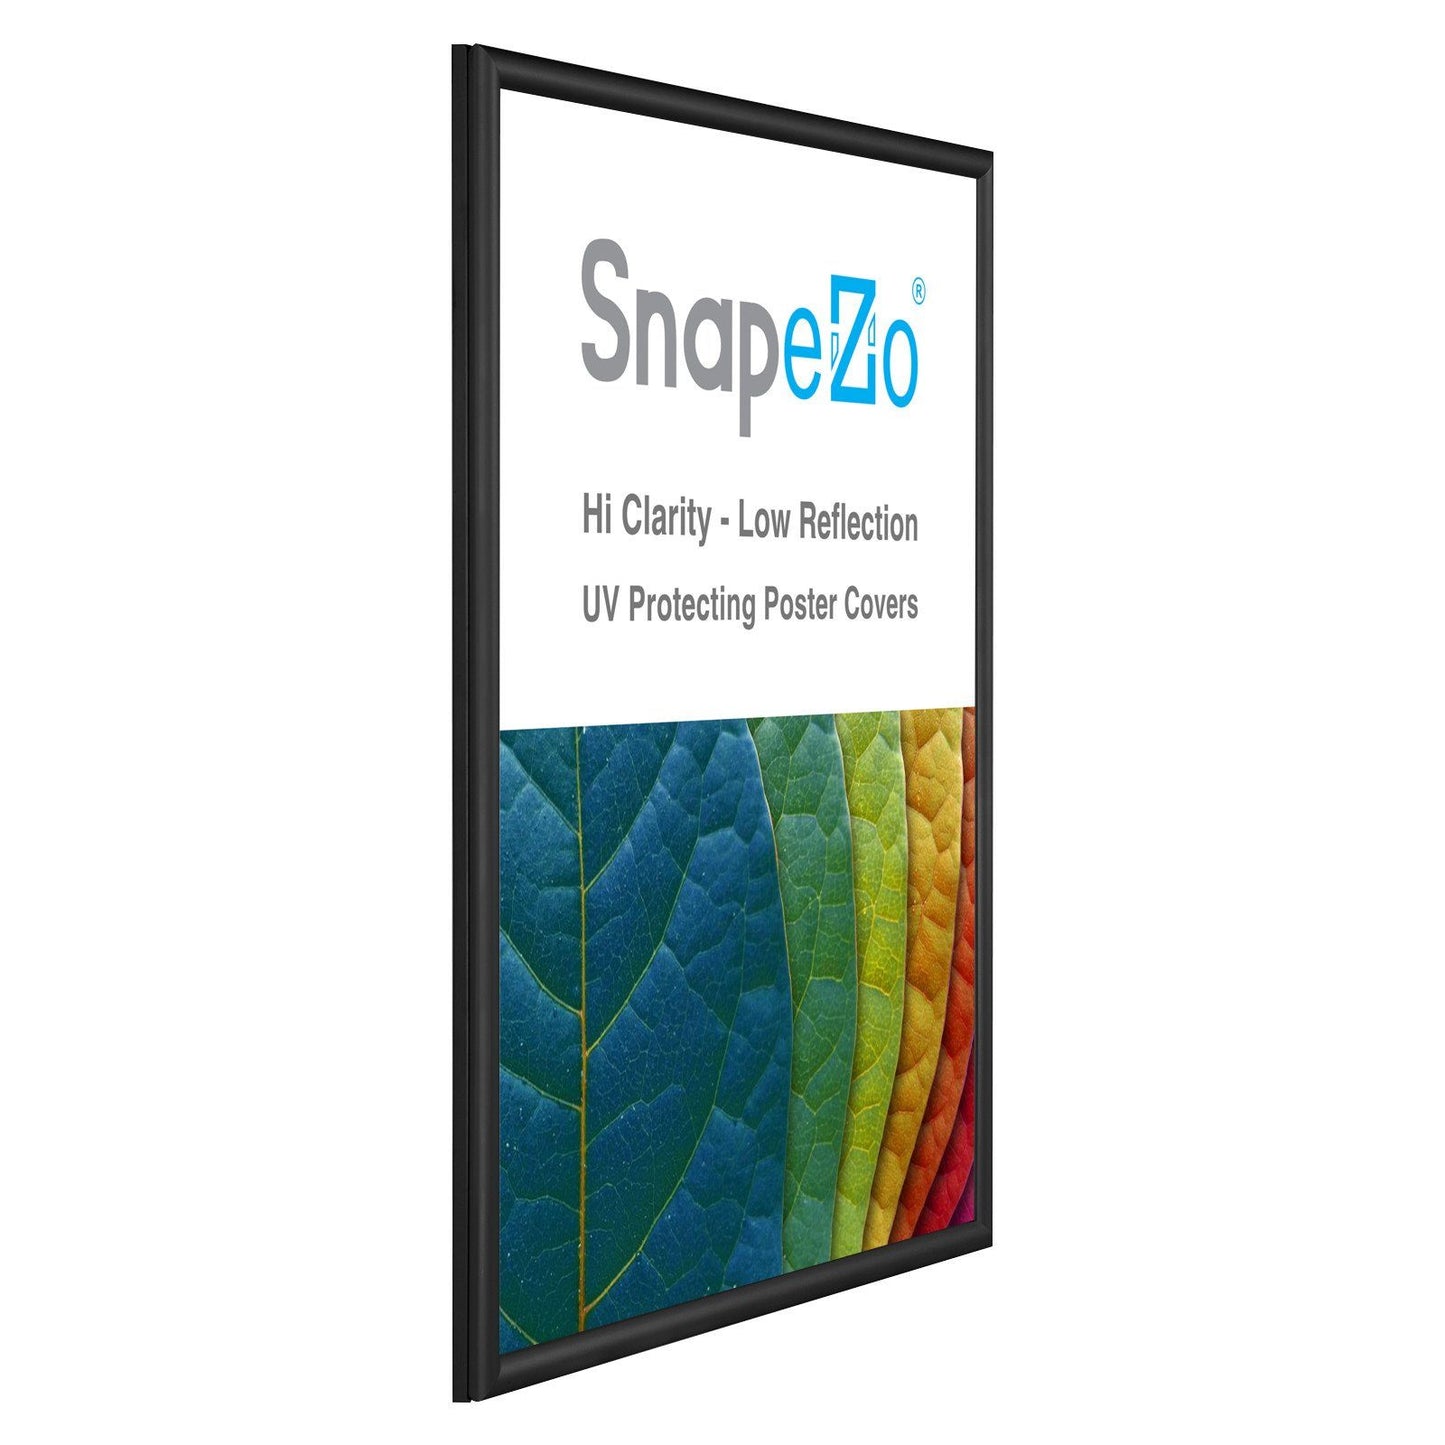 18x24 Black SnapeZo® Snap Frame - 0.6 Inch Profile